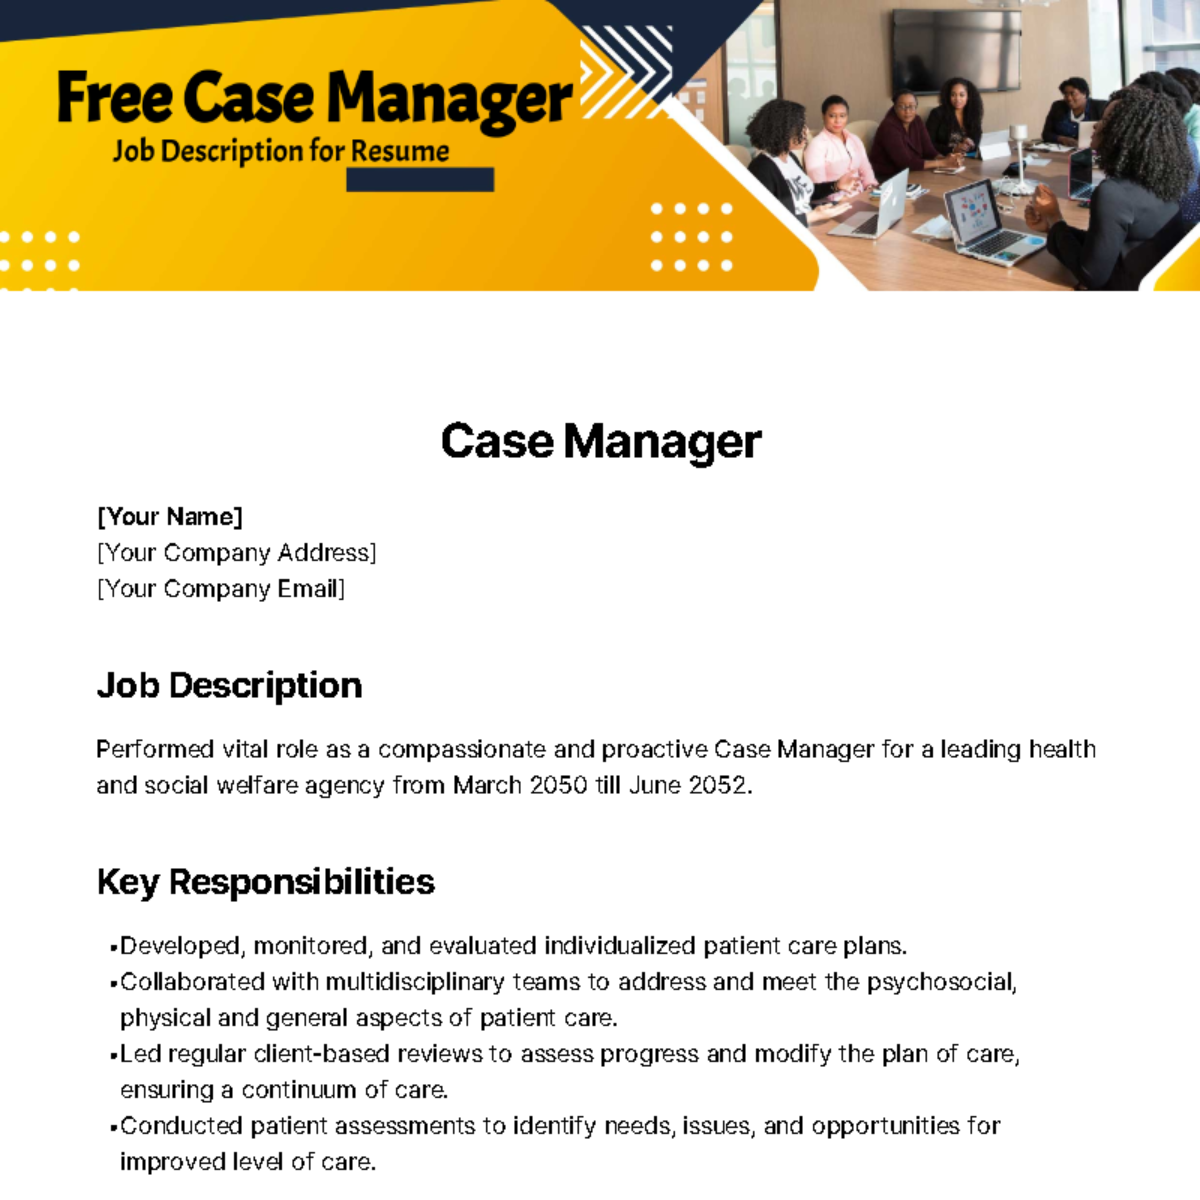 Free Case Manager Job Description for Resume Template